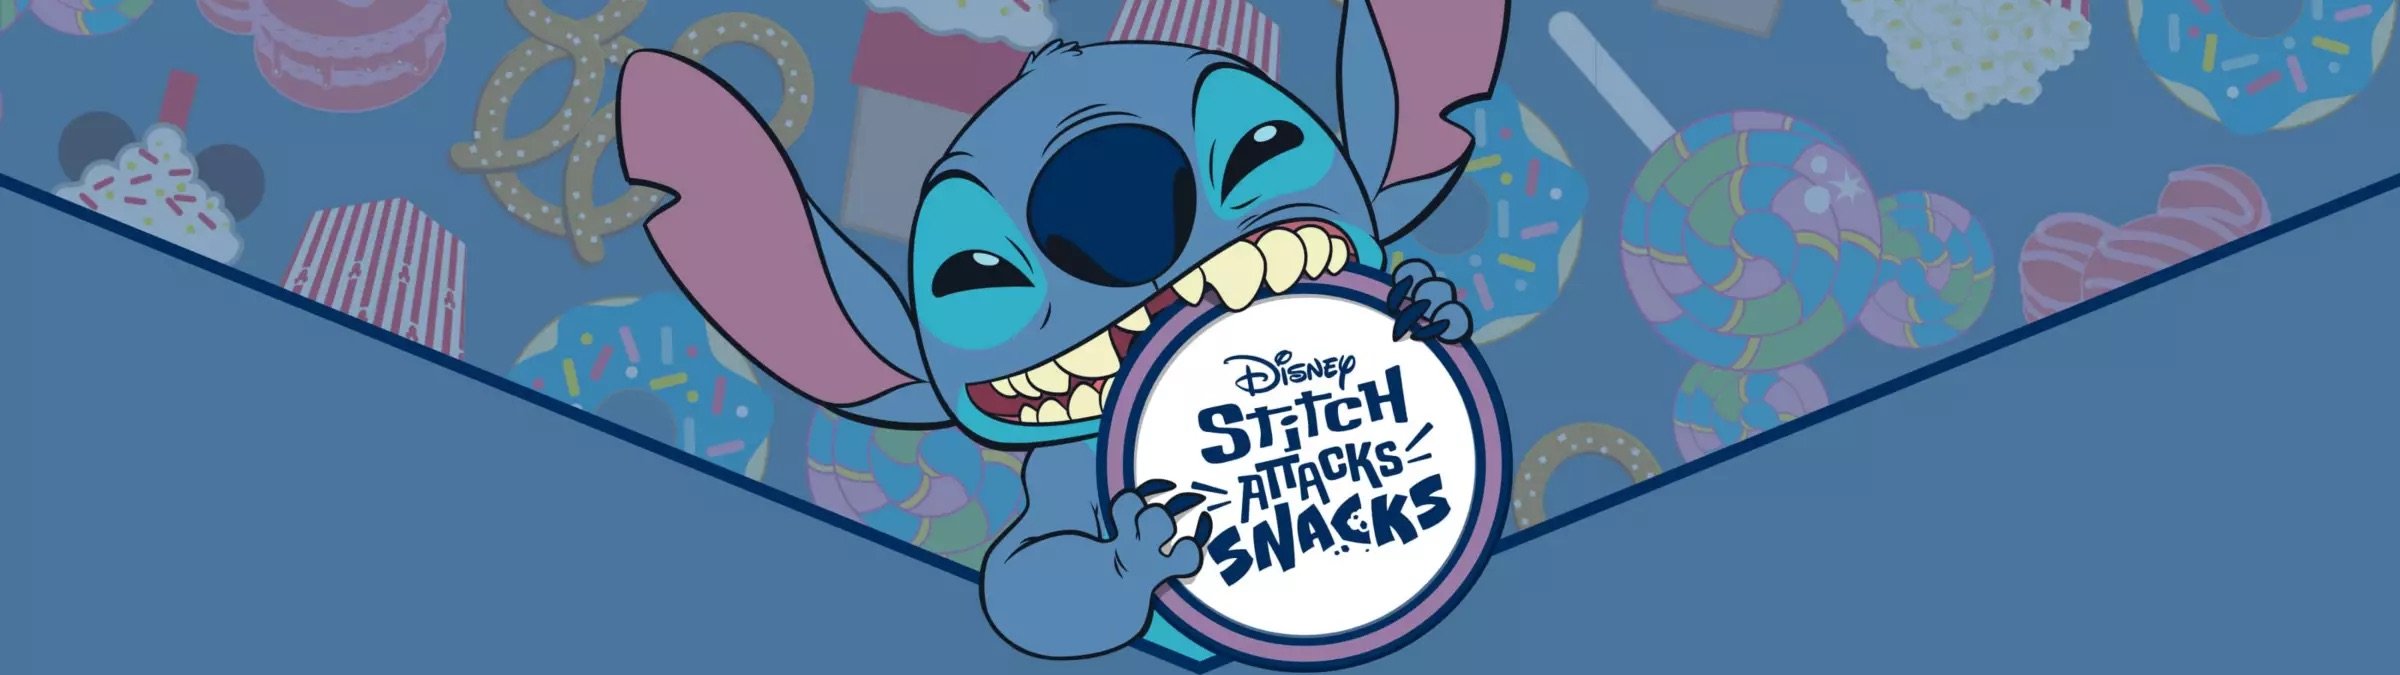 Stitch Attacks Snacks Limited Release Pin Set, Pretzel, January